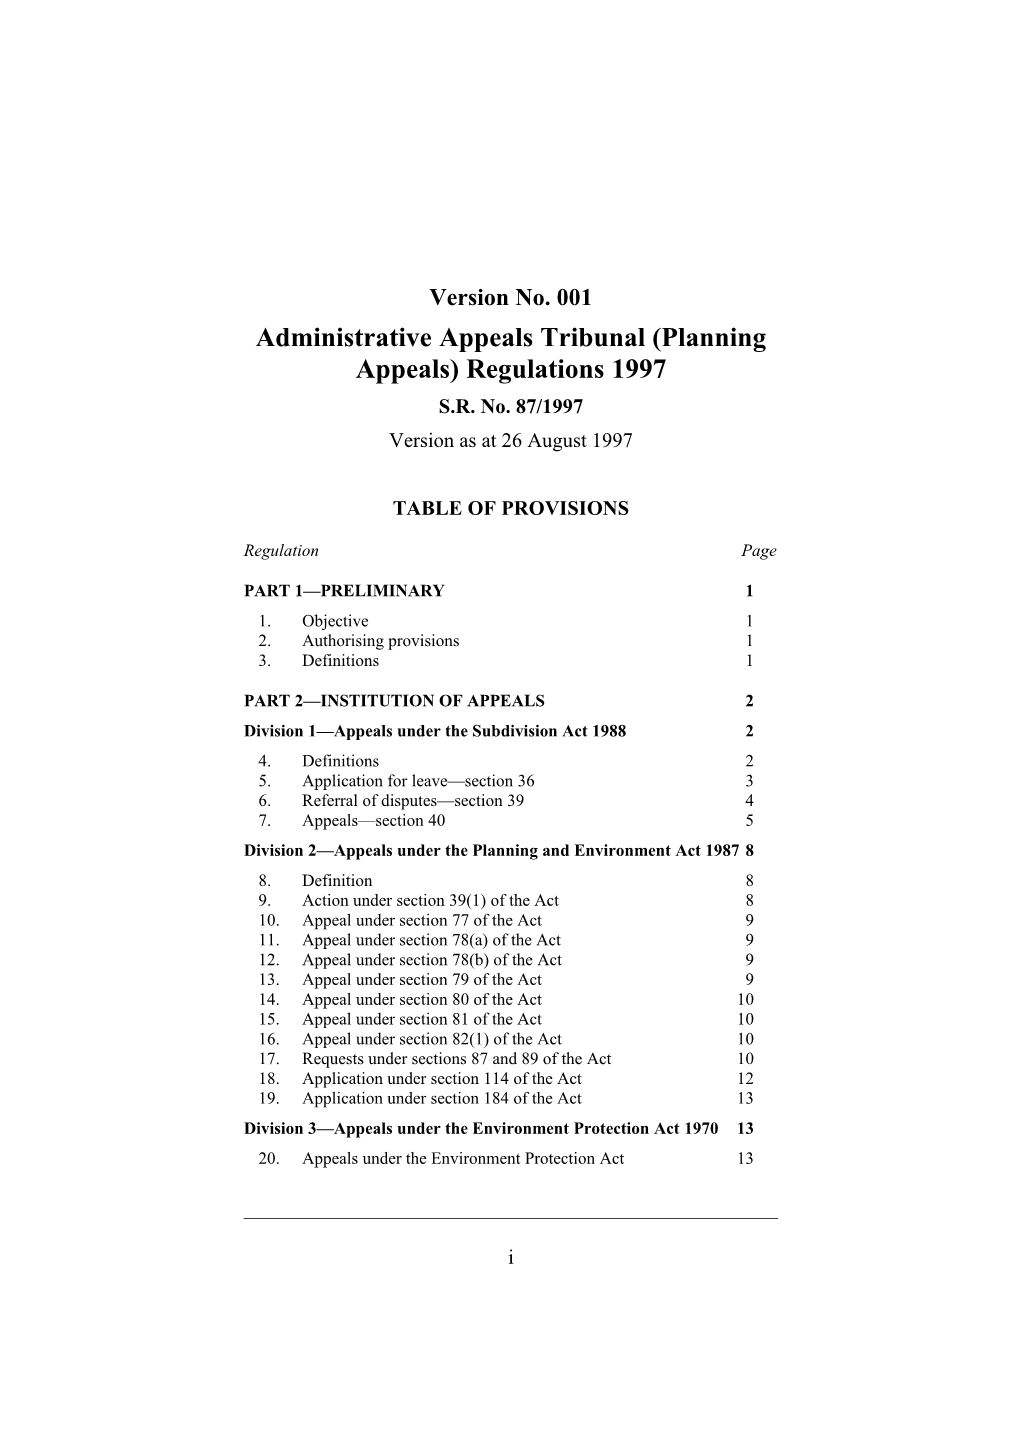 Administrative Appeals Tribunal (Planning Appeals) Regulations 1997